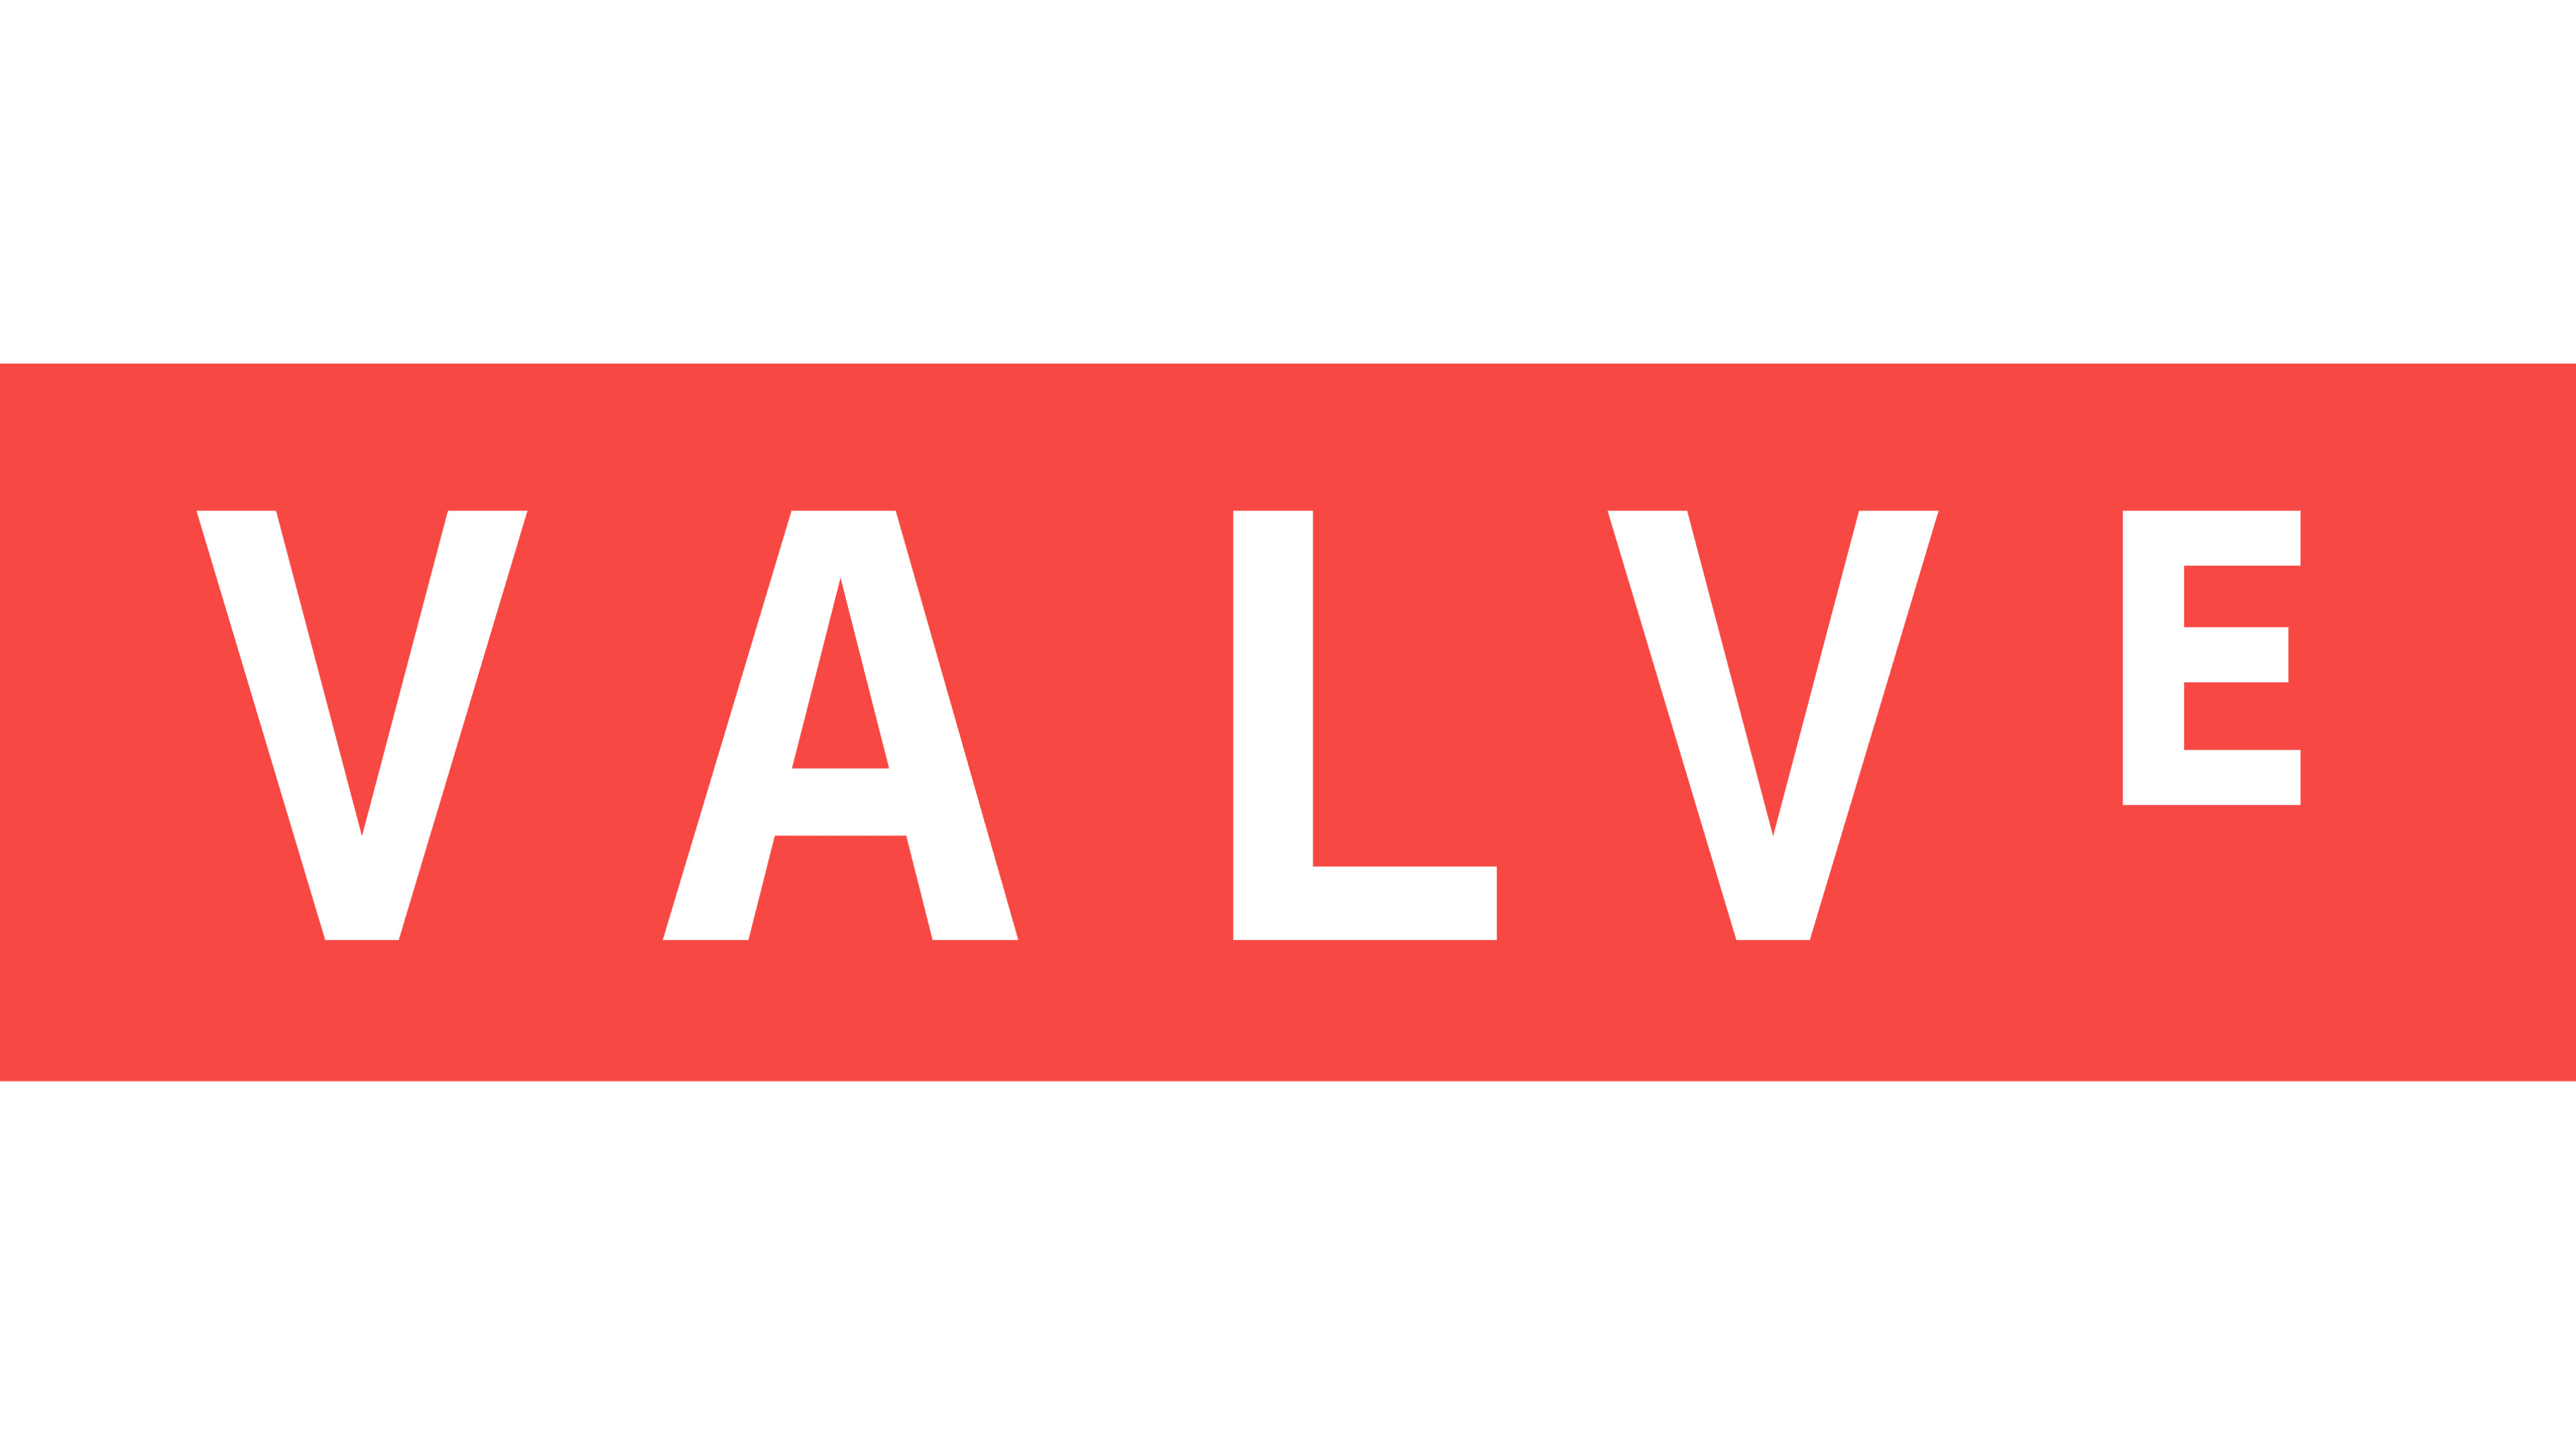 Valve Corporation News